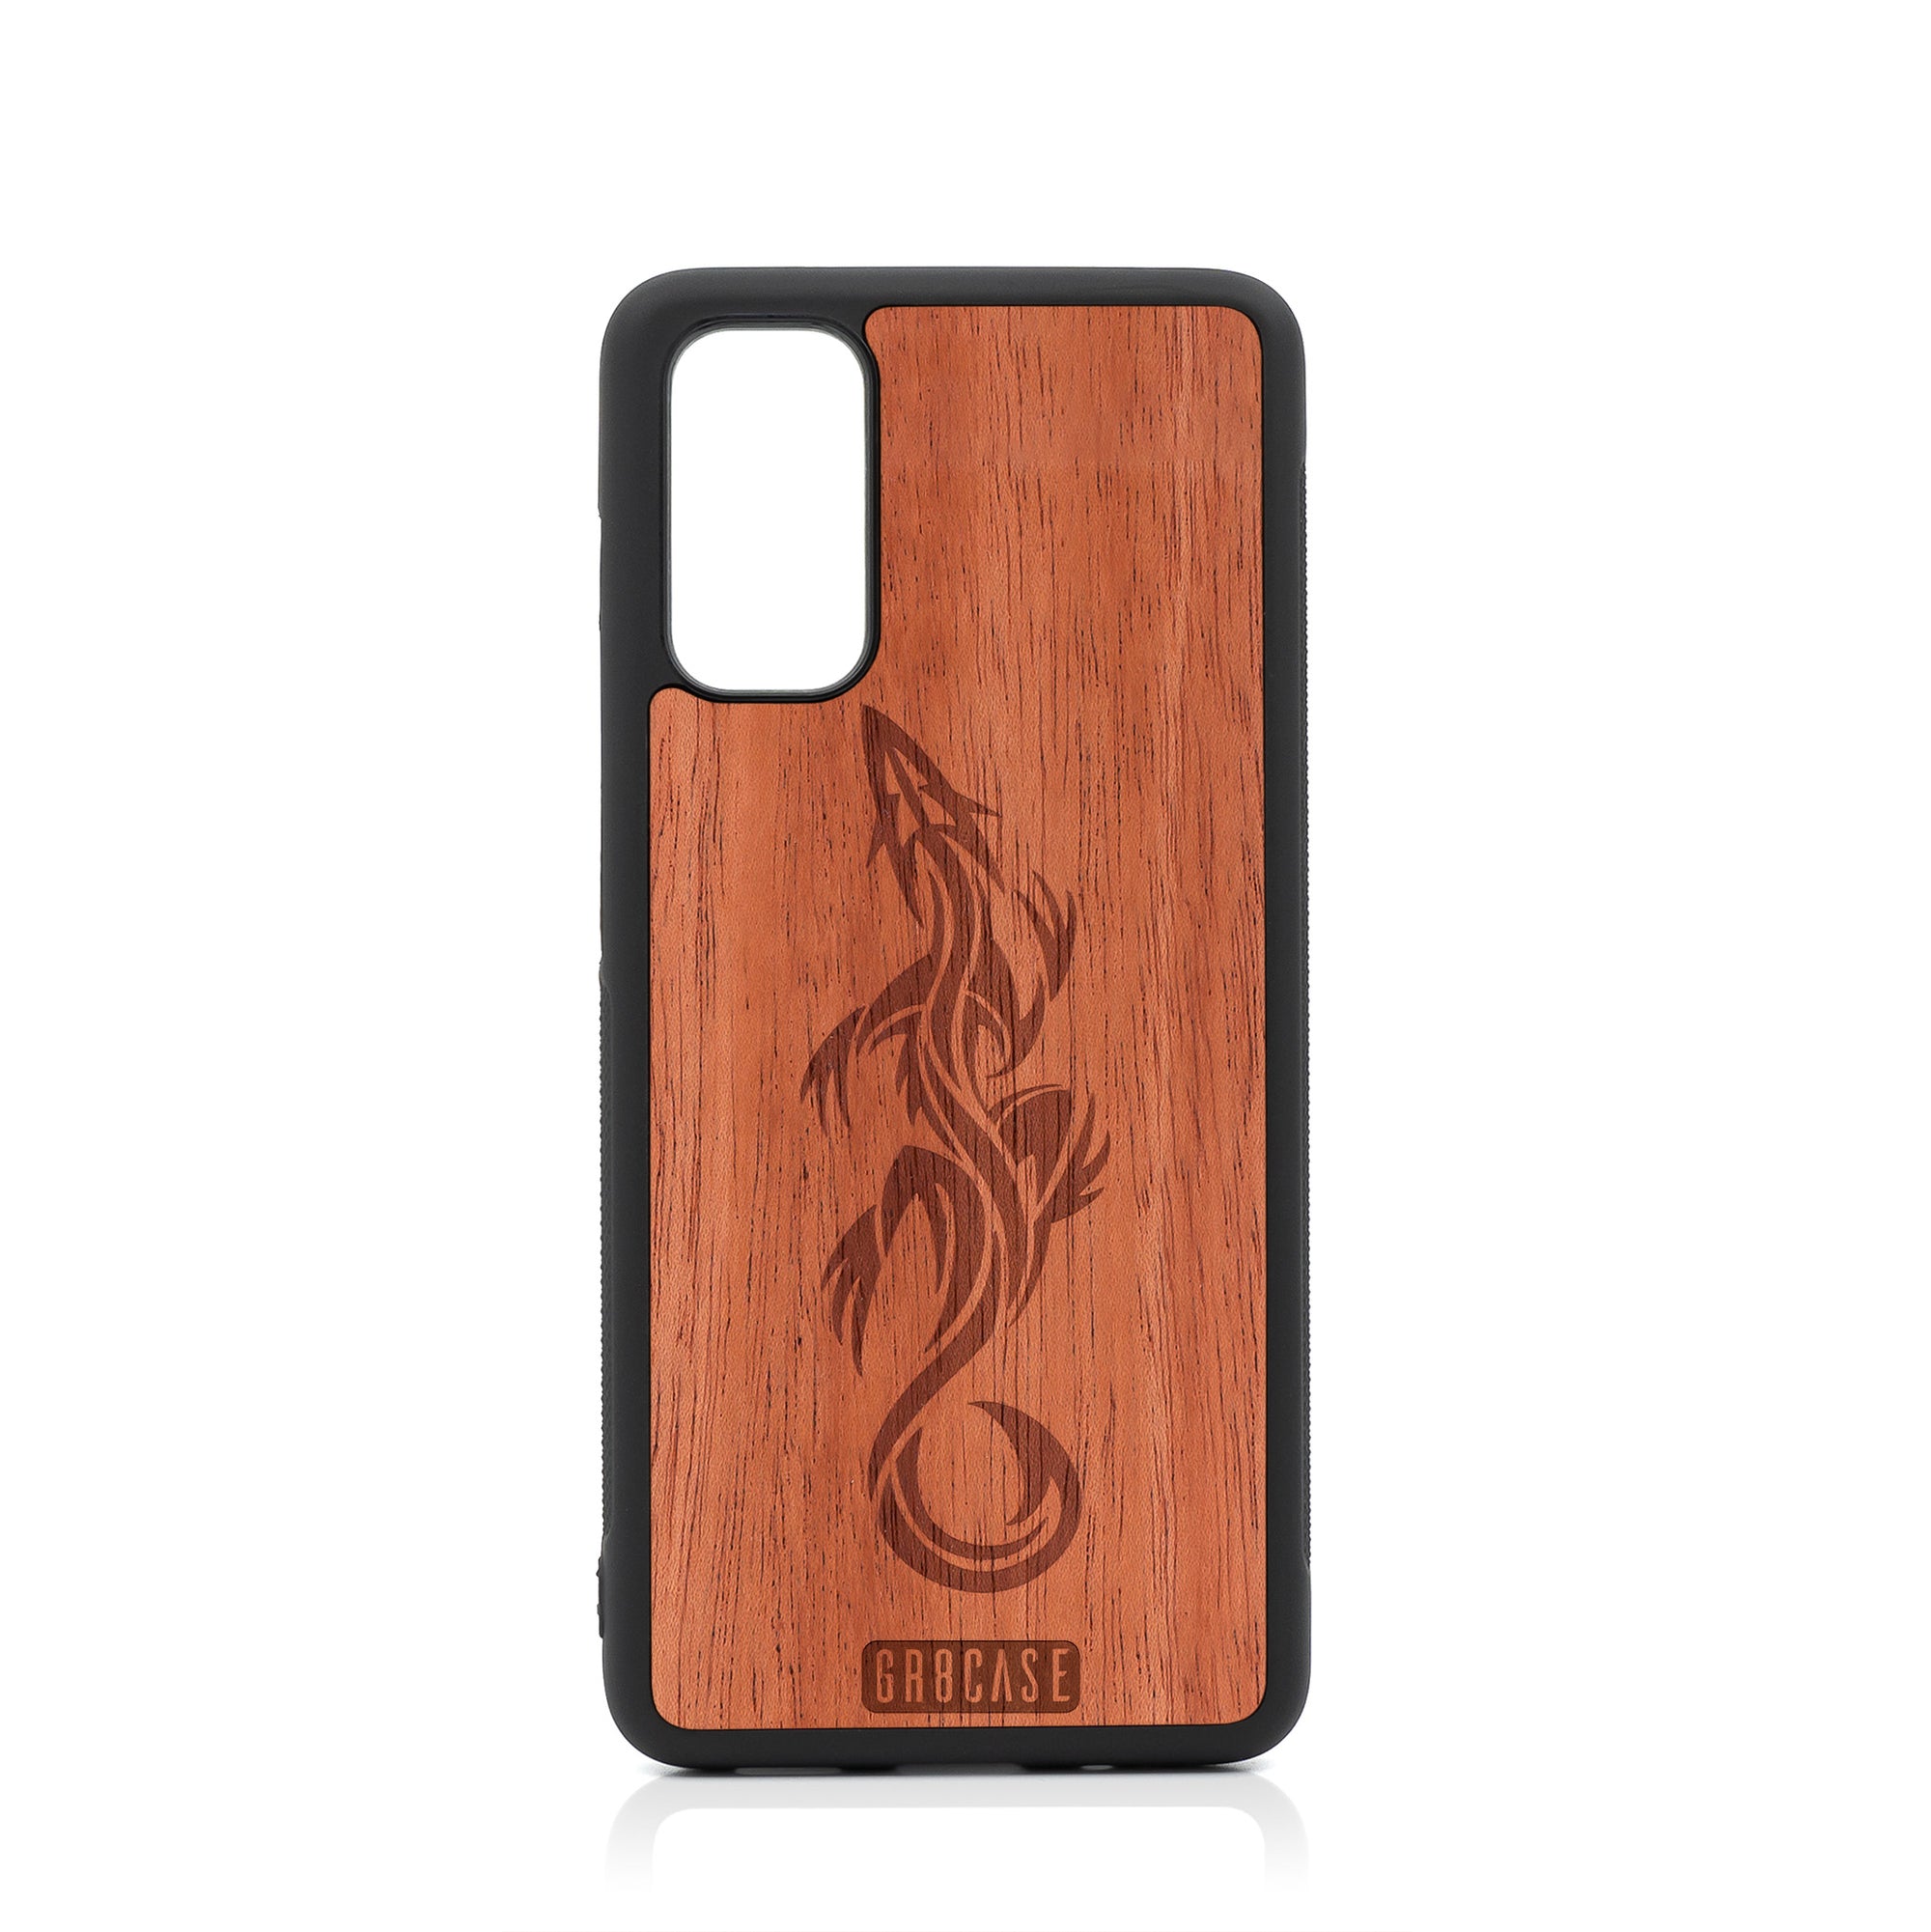 Lizard Design Wood Case For Samsung Galaxy S20 by GR8CASE